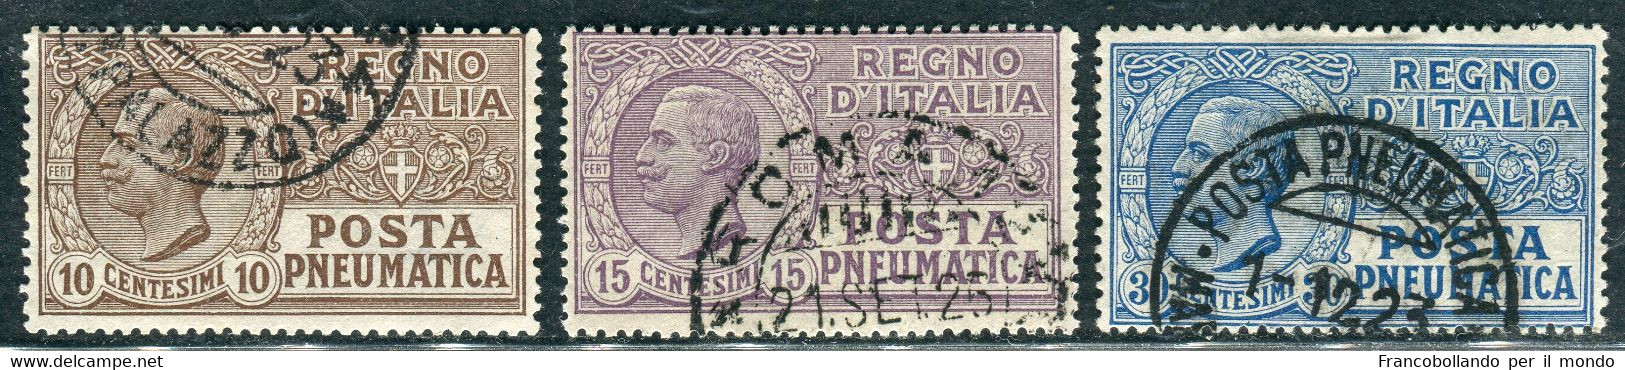 1913/23 Regno D'Italia Posta Pneumatica Set Usato N° S1900 - Correo Neumático